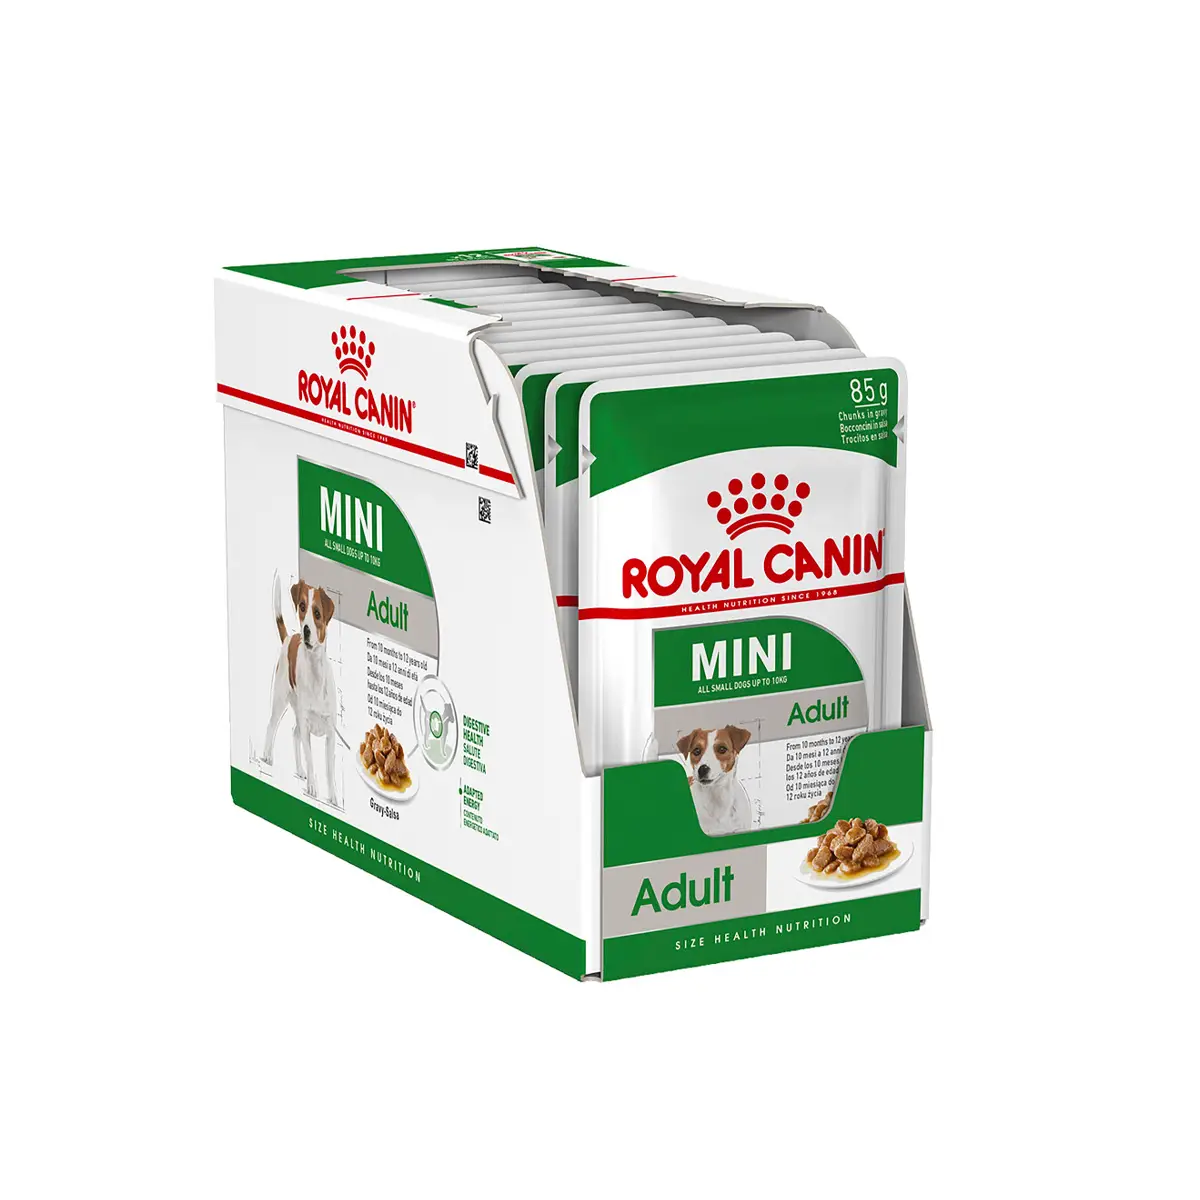 Royal Canin - Adult Mini Gravy Wet Food 85g